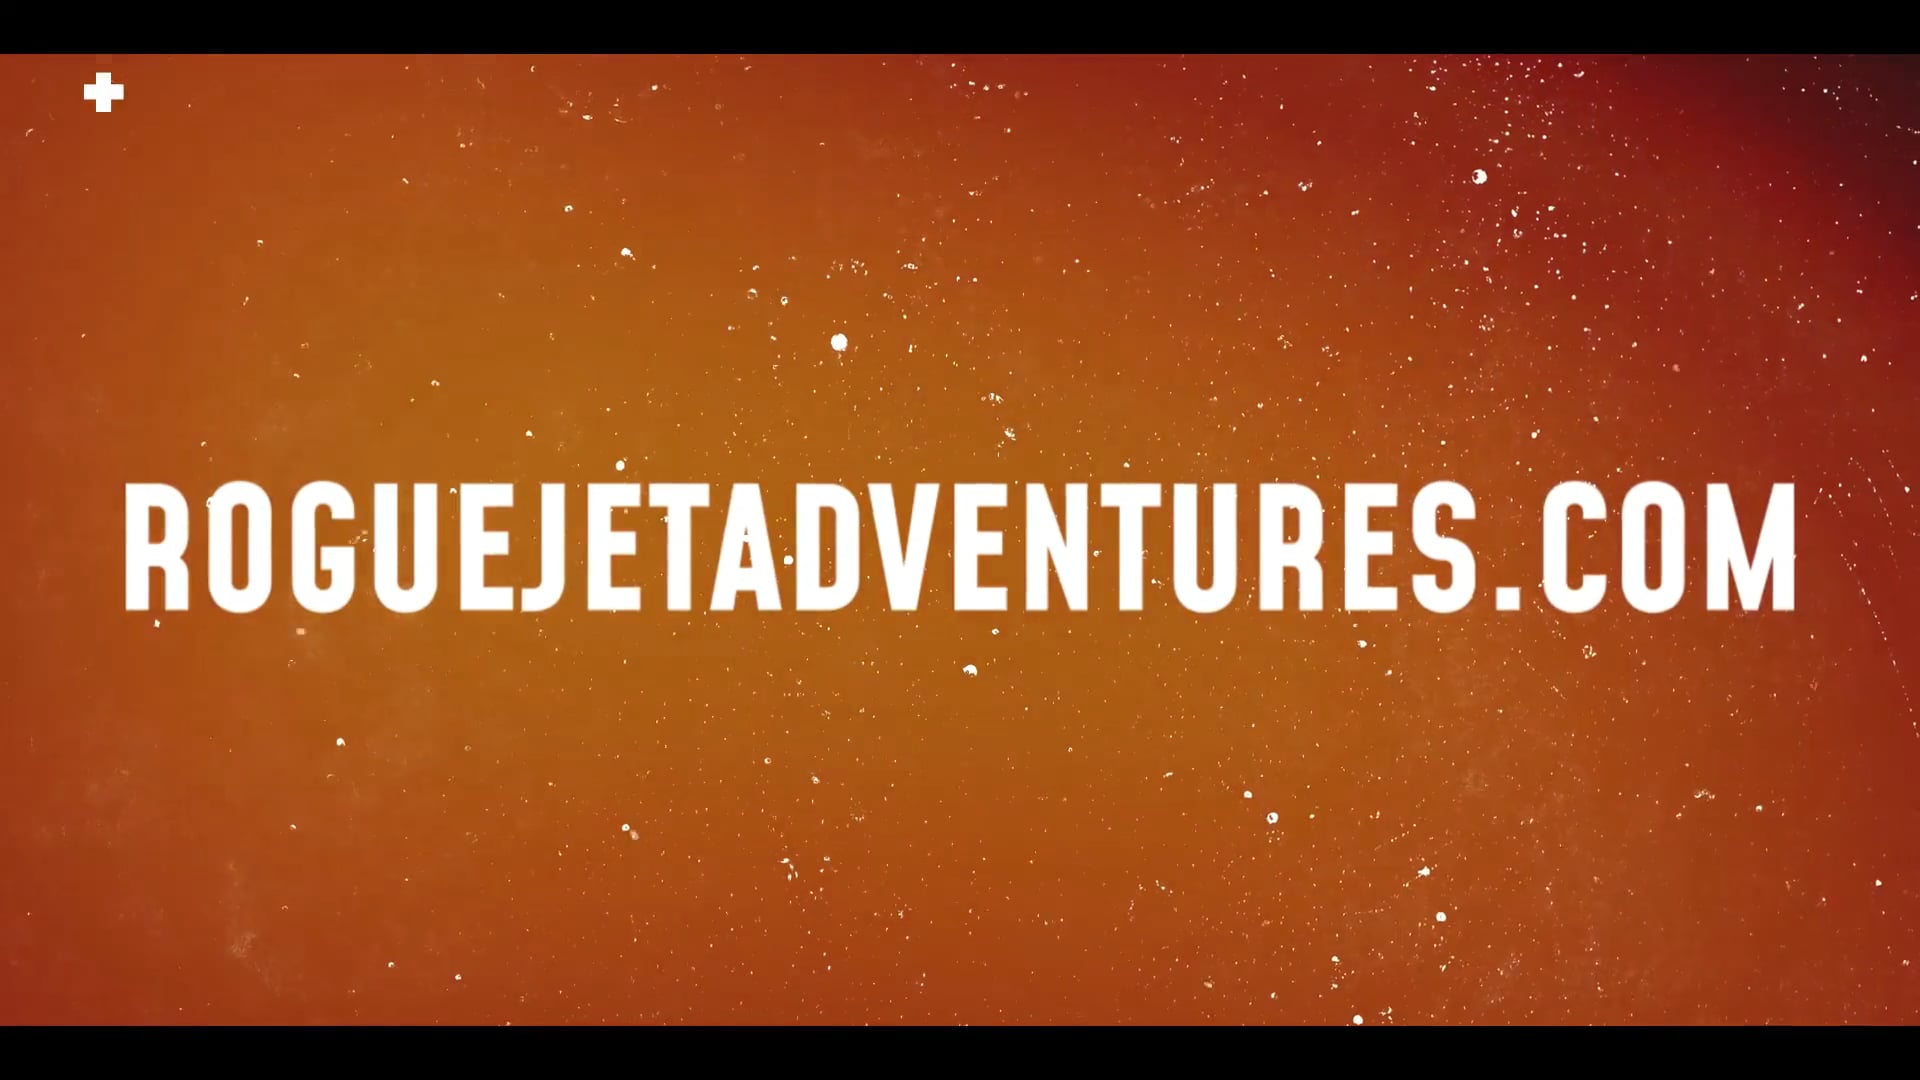 Rogue Jet Adventures season promo